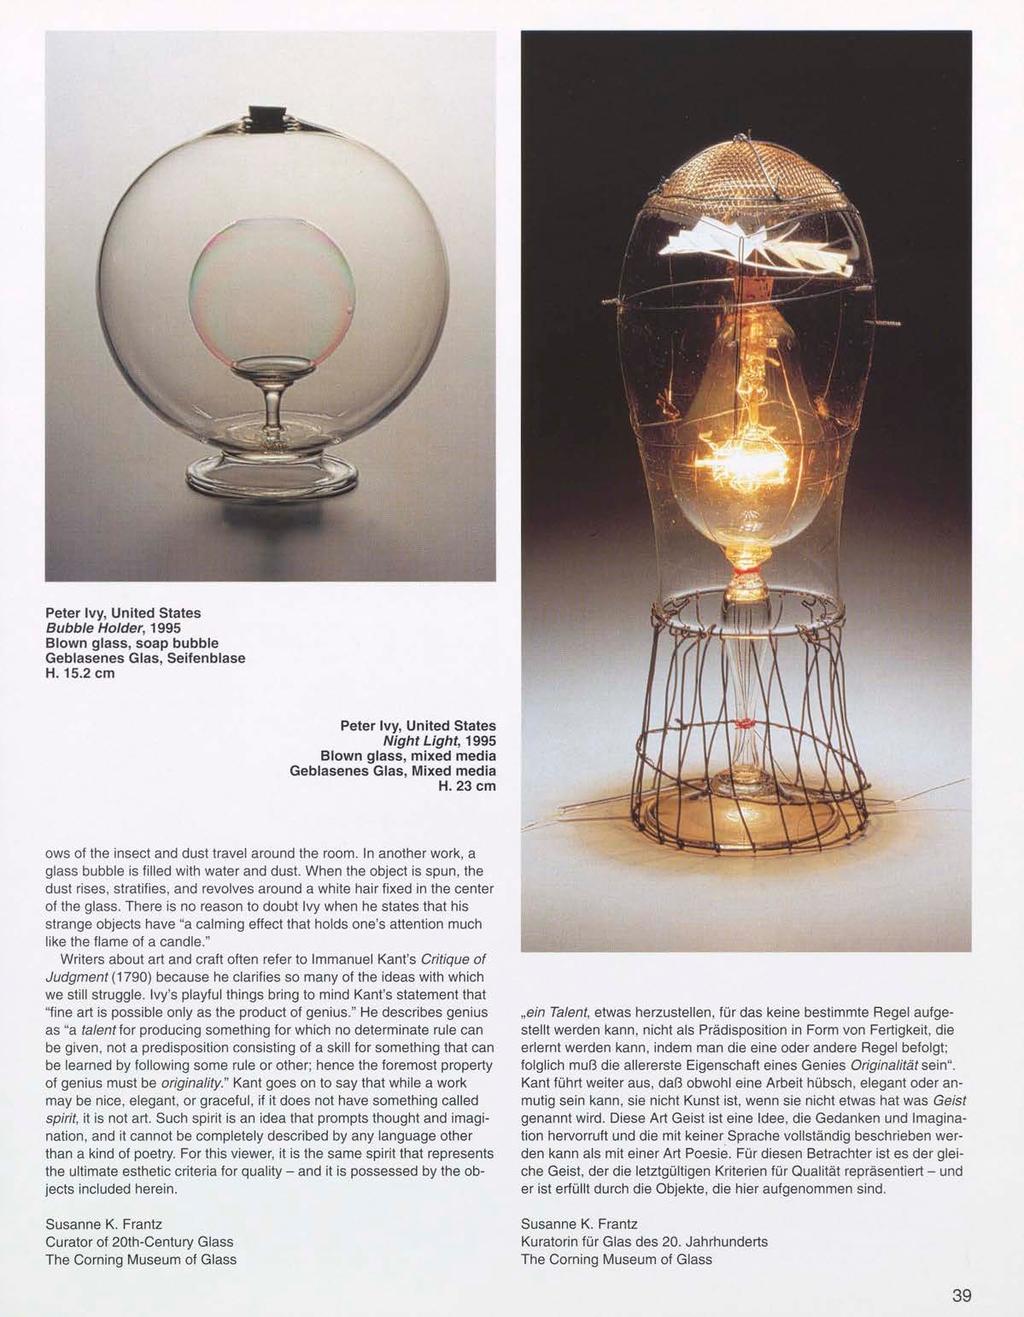 Peter Ivy, United States Bubble Holder, 1995 Blown glass, soap bubble Geblasenes Glas, Seifenblase H. 15.